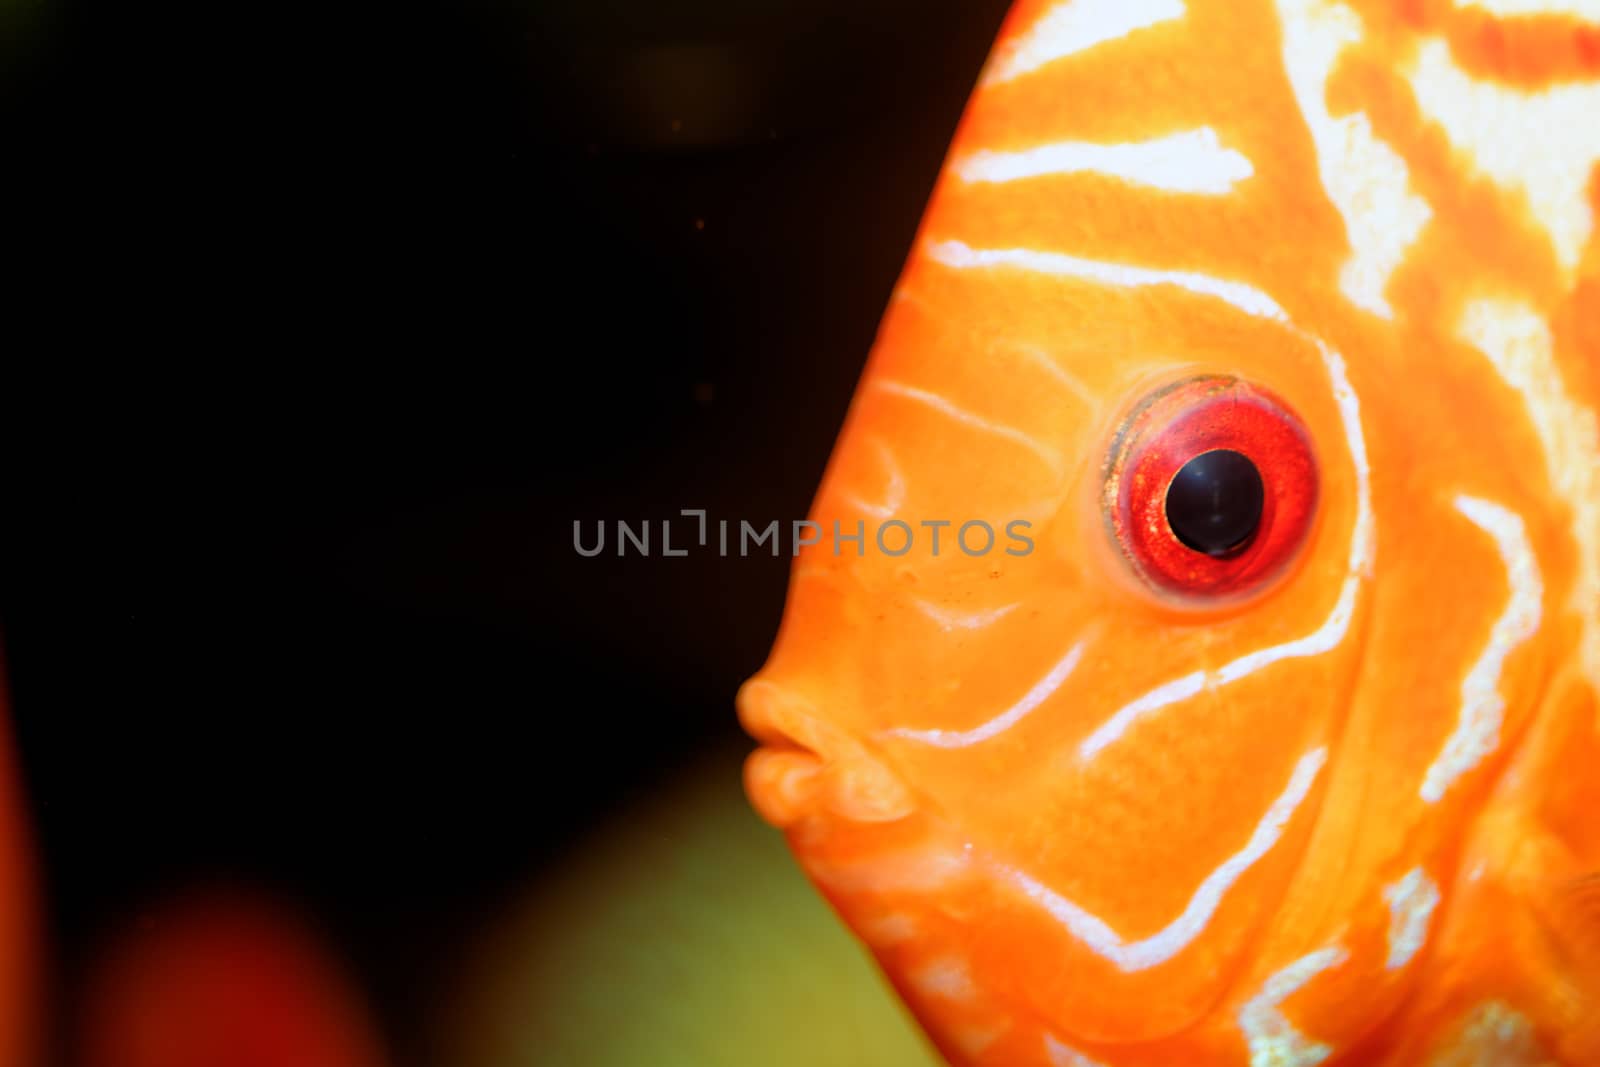 Very nice portrait of orange discu fish.